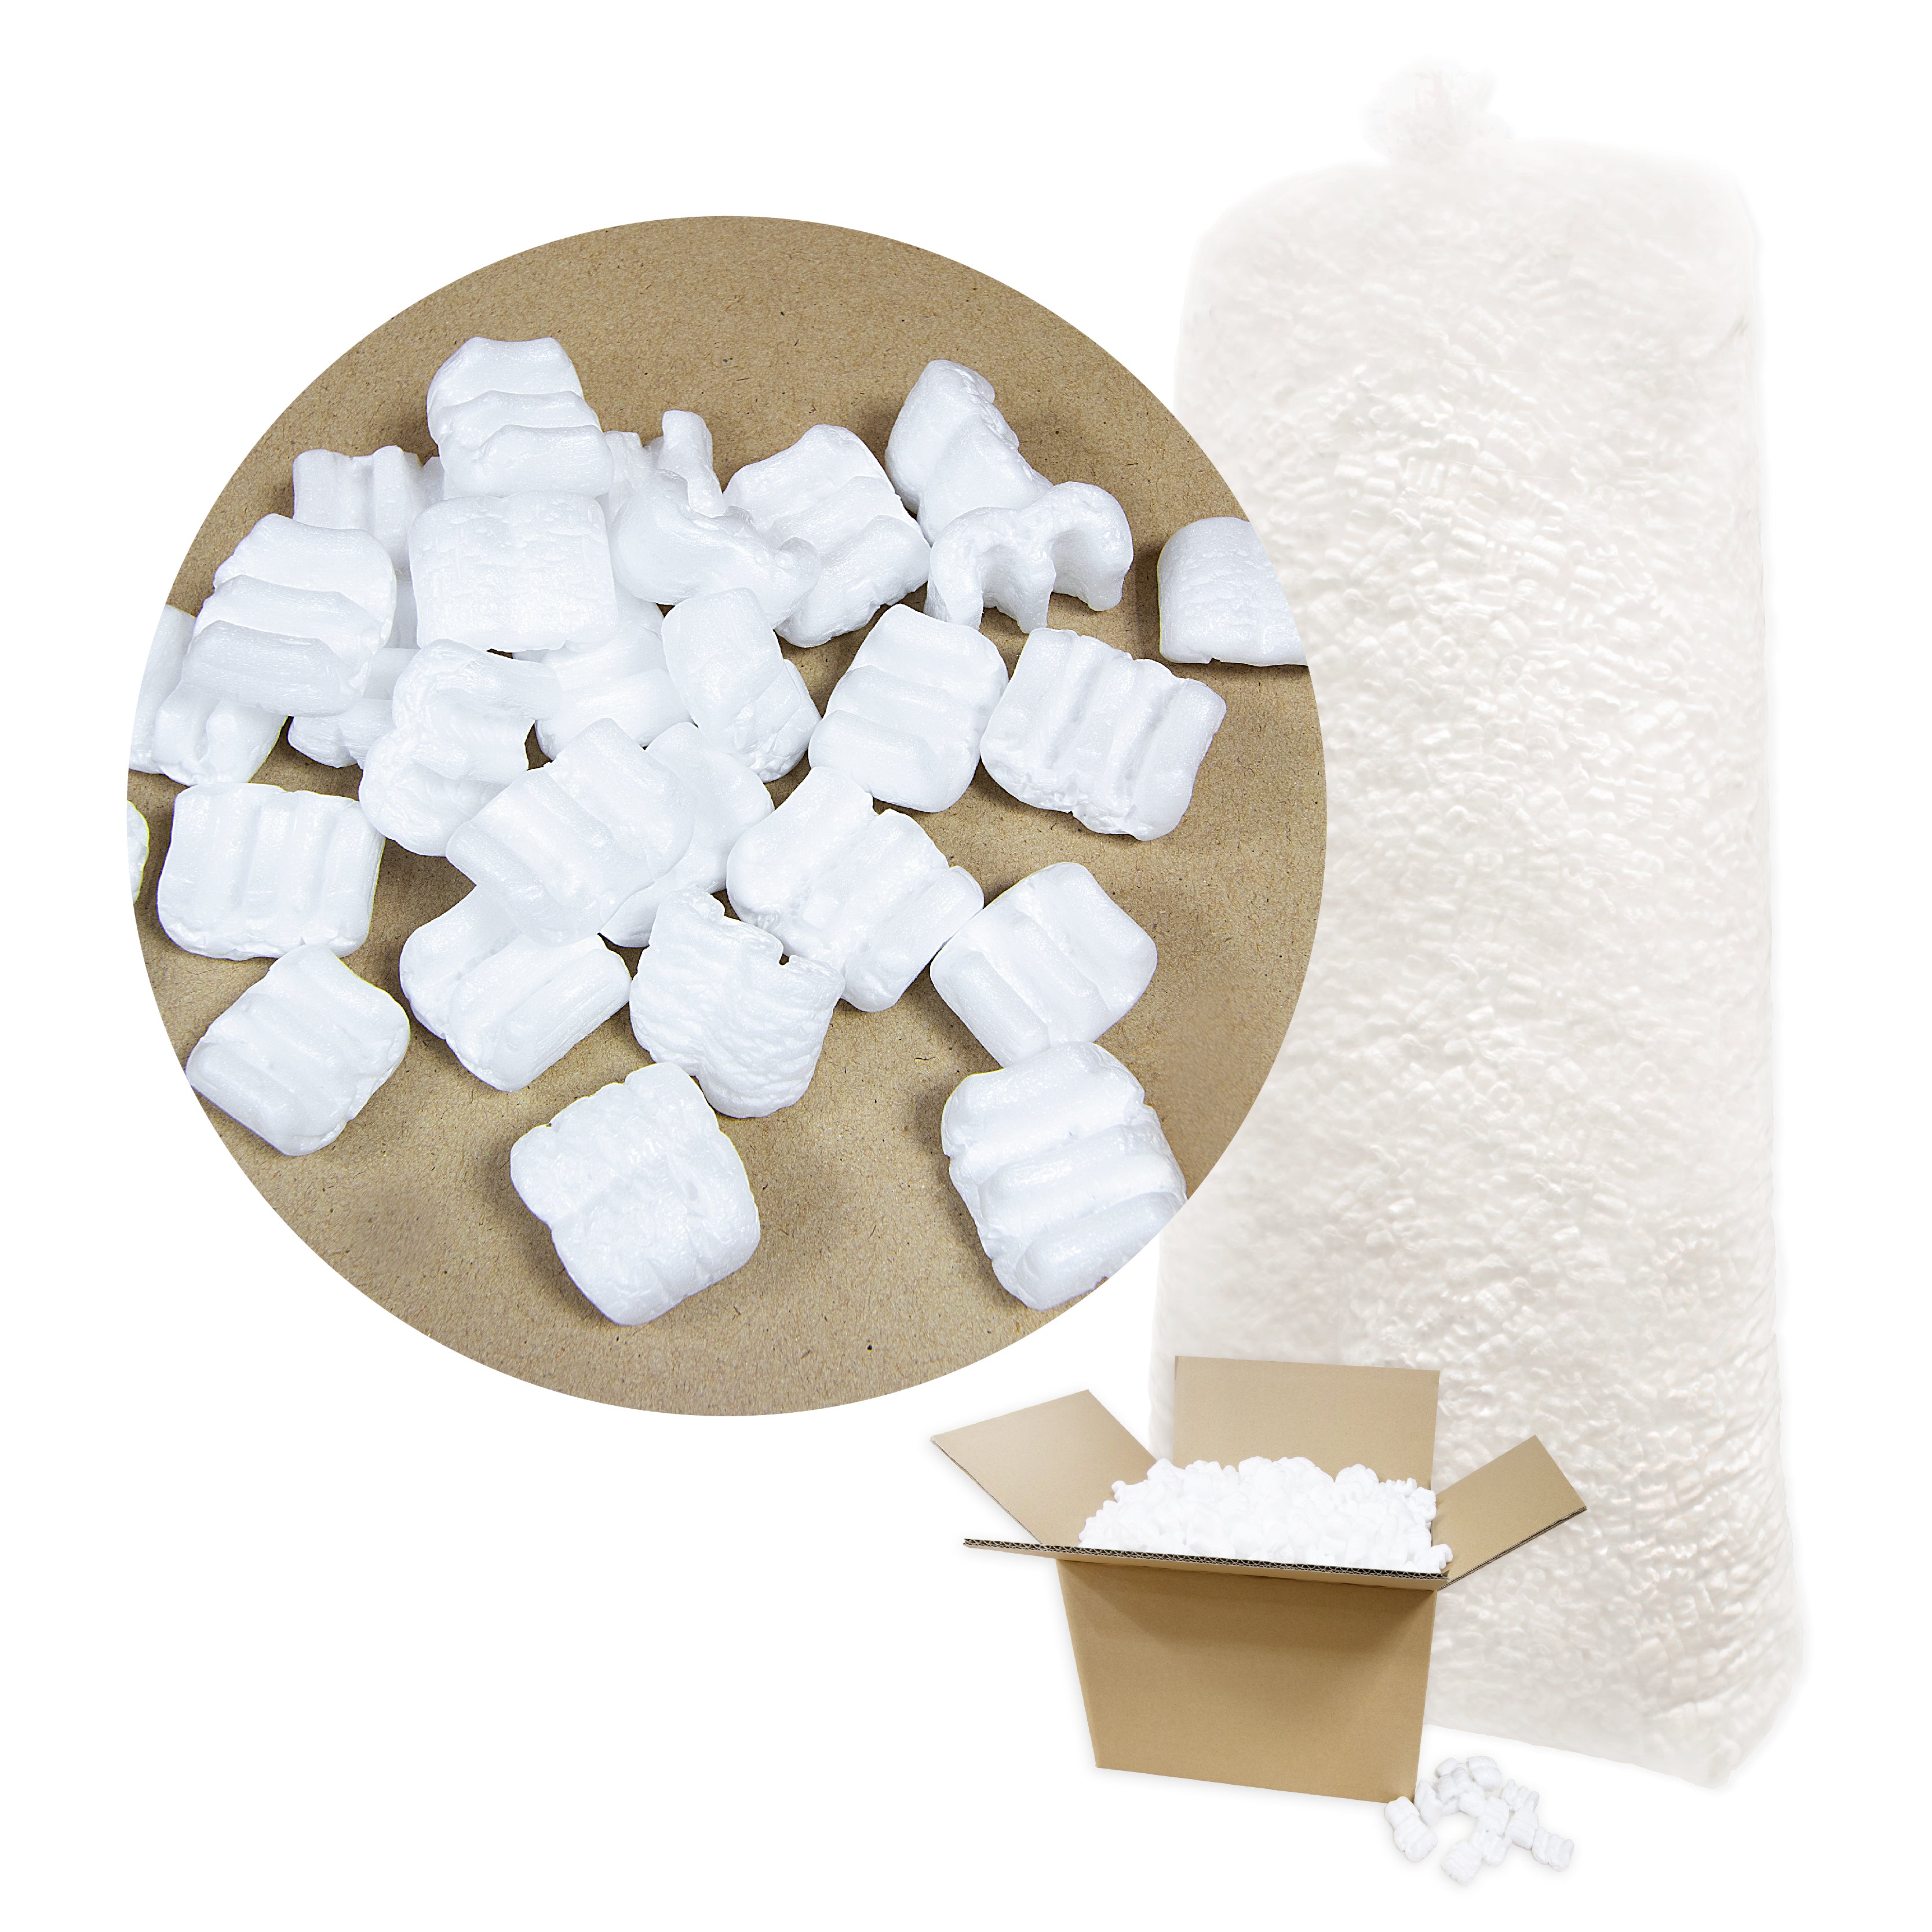 E Shape Polystyrene Packaging Filling Foam  E字包裝填充發泡膠粒